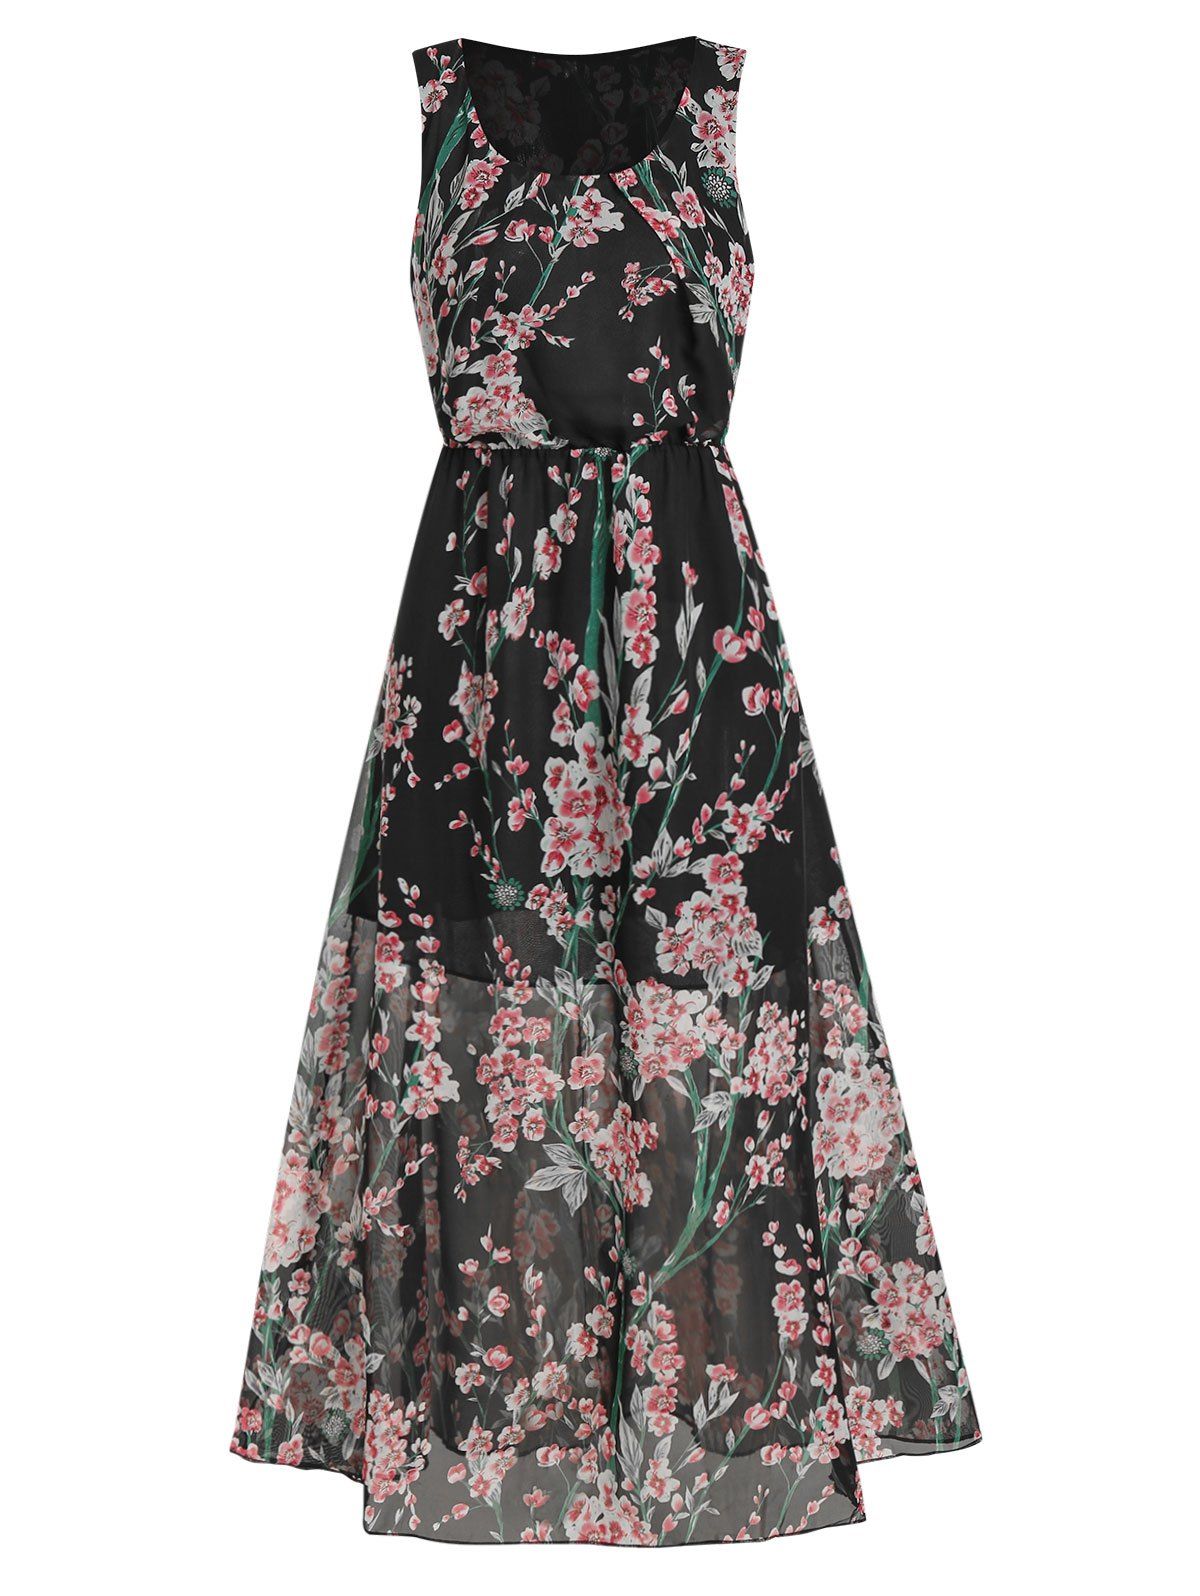 Floral Print Elastic Waist Maxi Dress - BLACK S